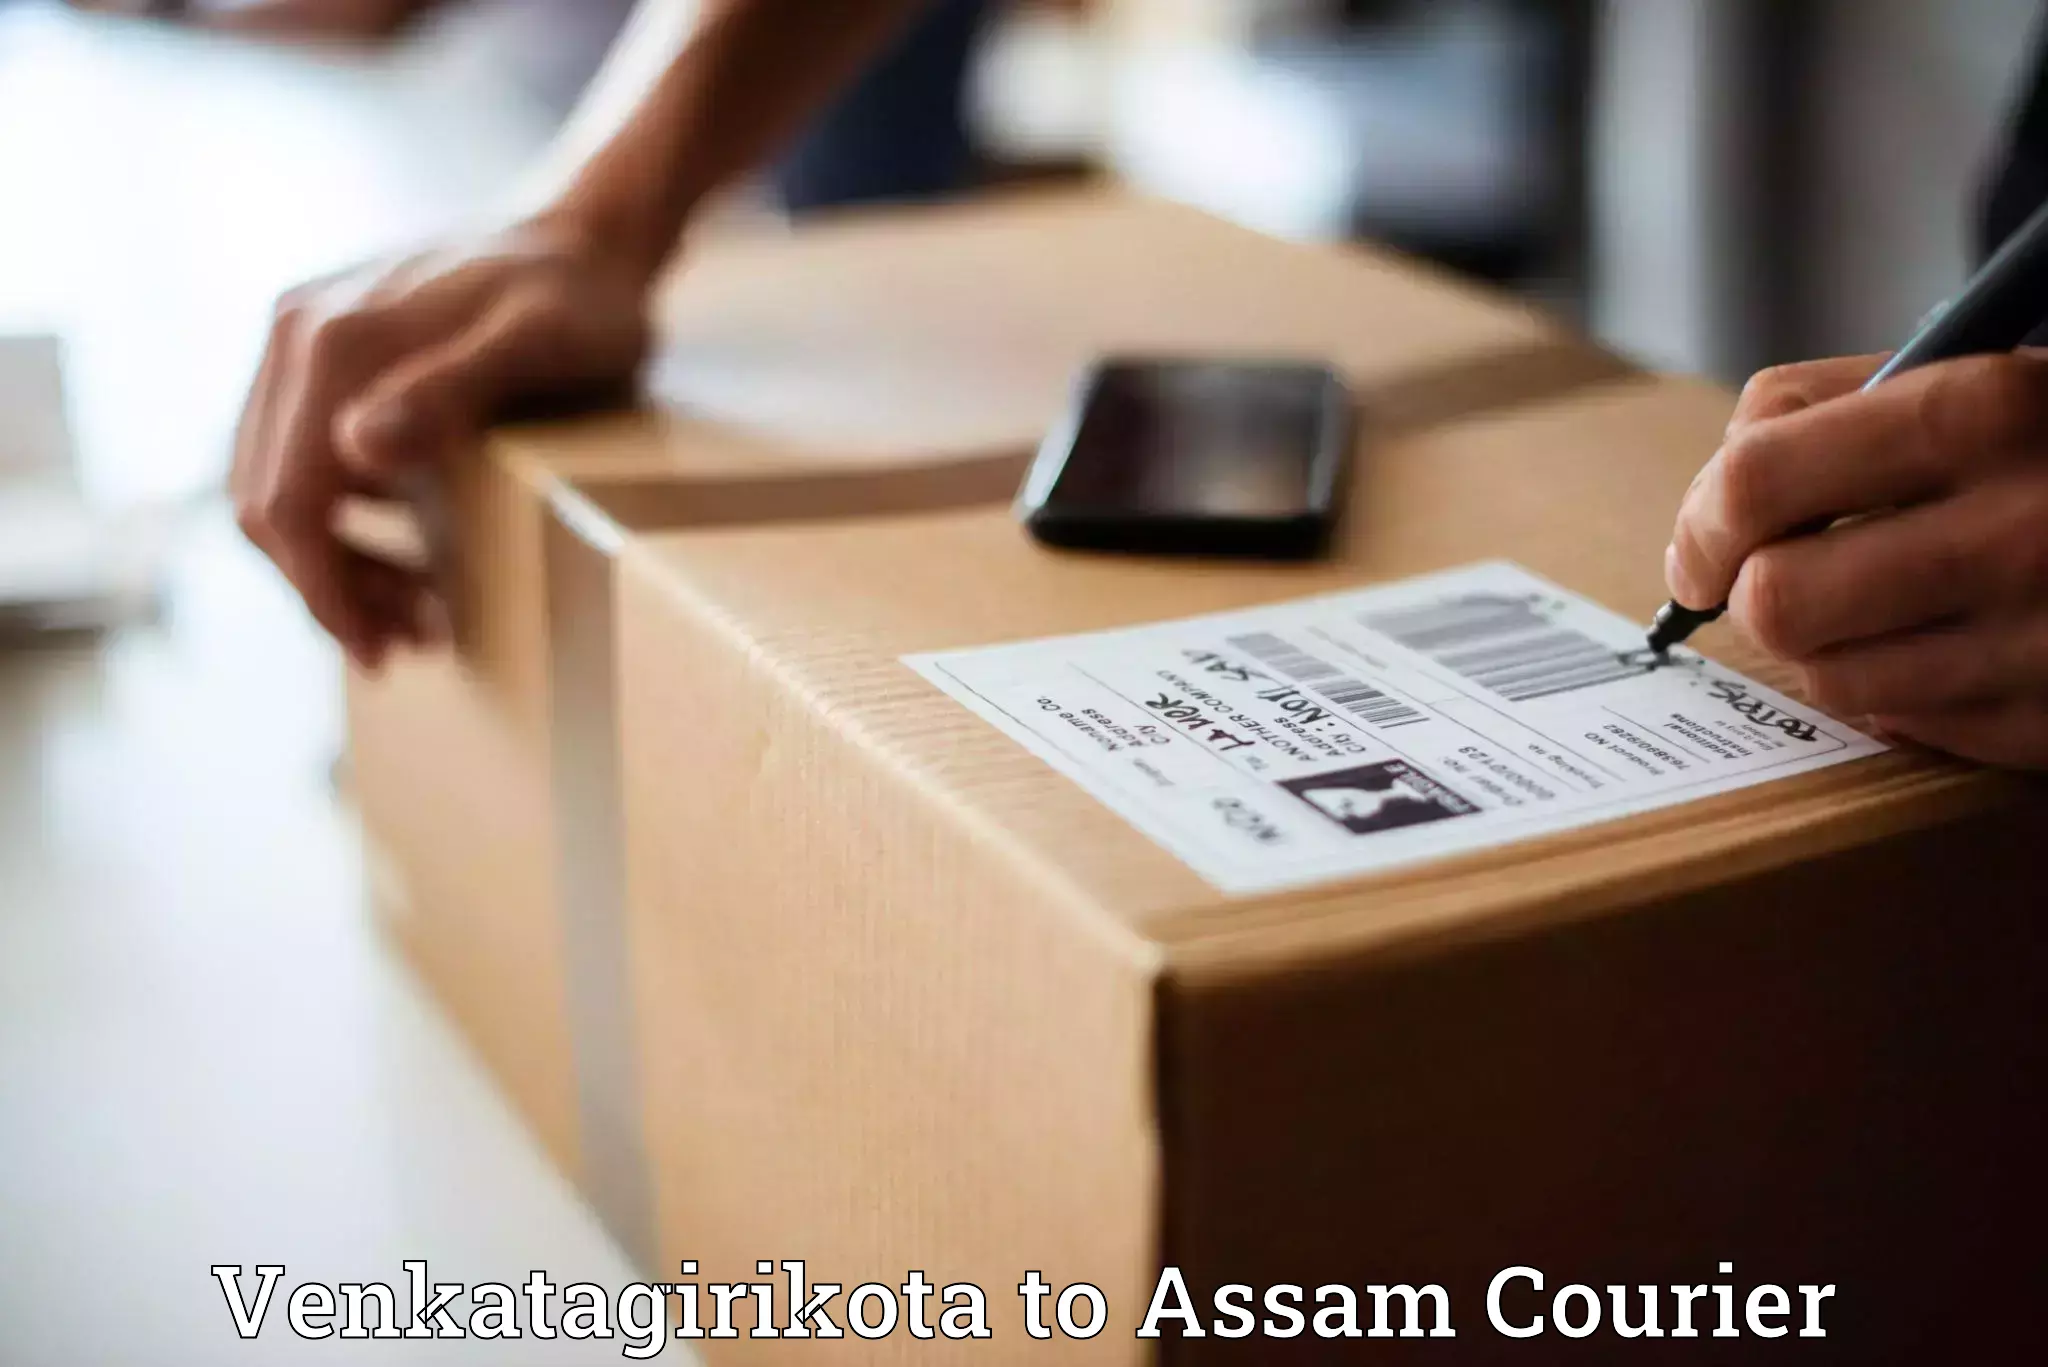 State-of-the-art courier technology Venkatagirikota to Kusumtola